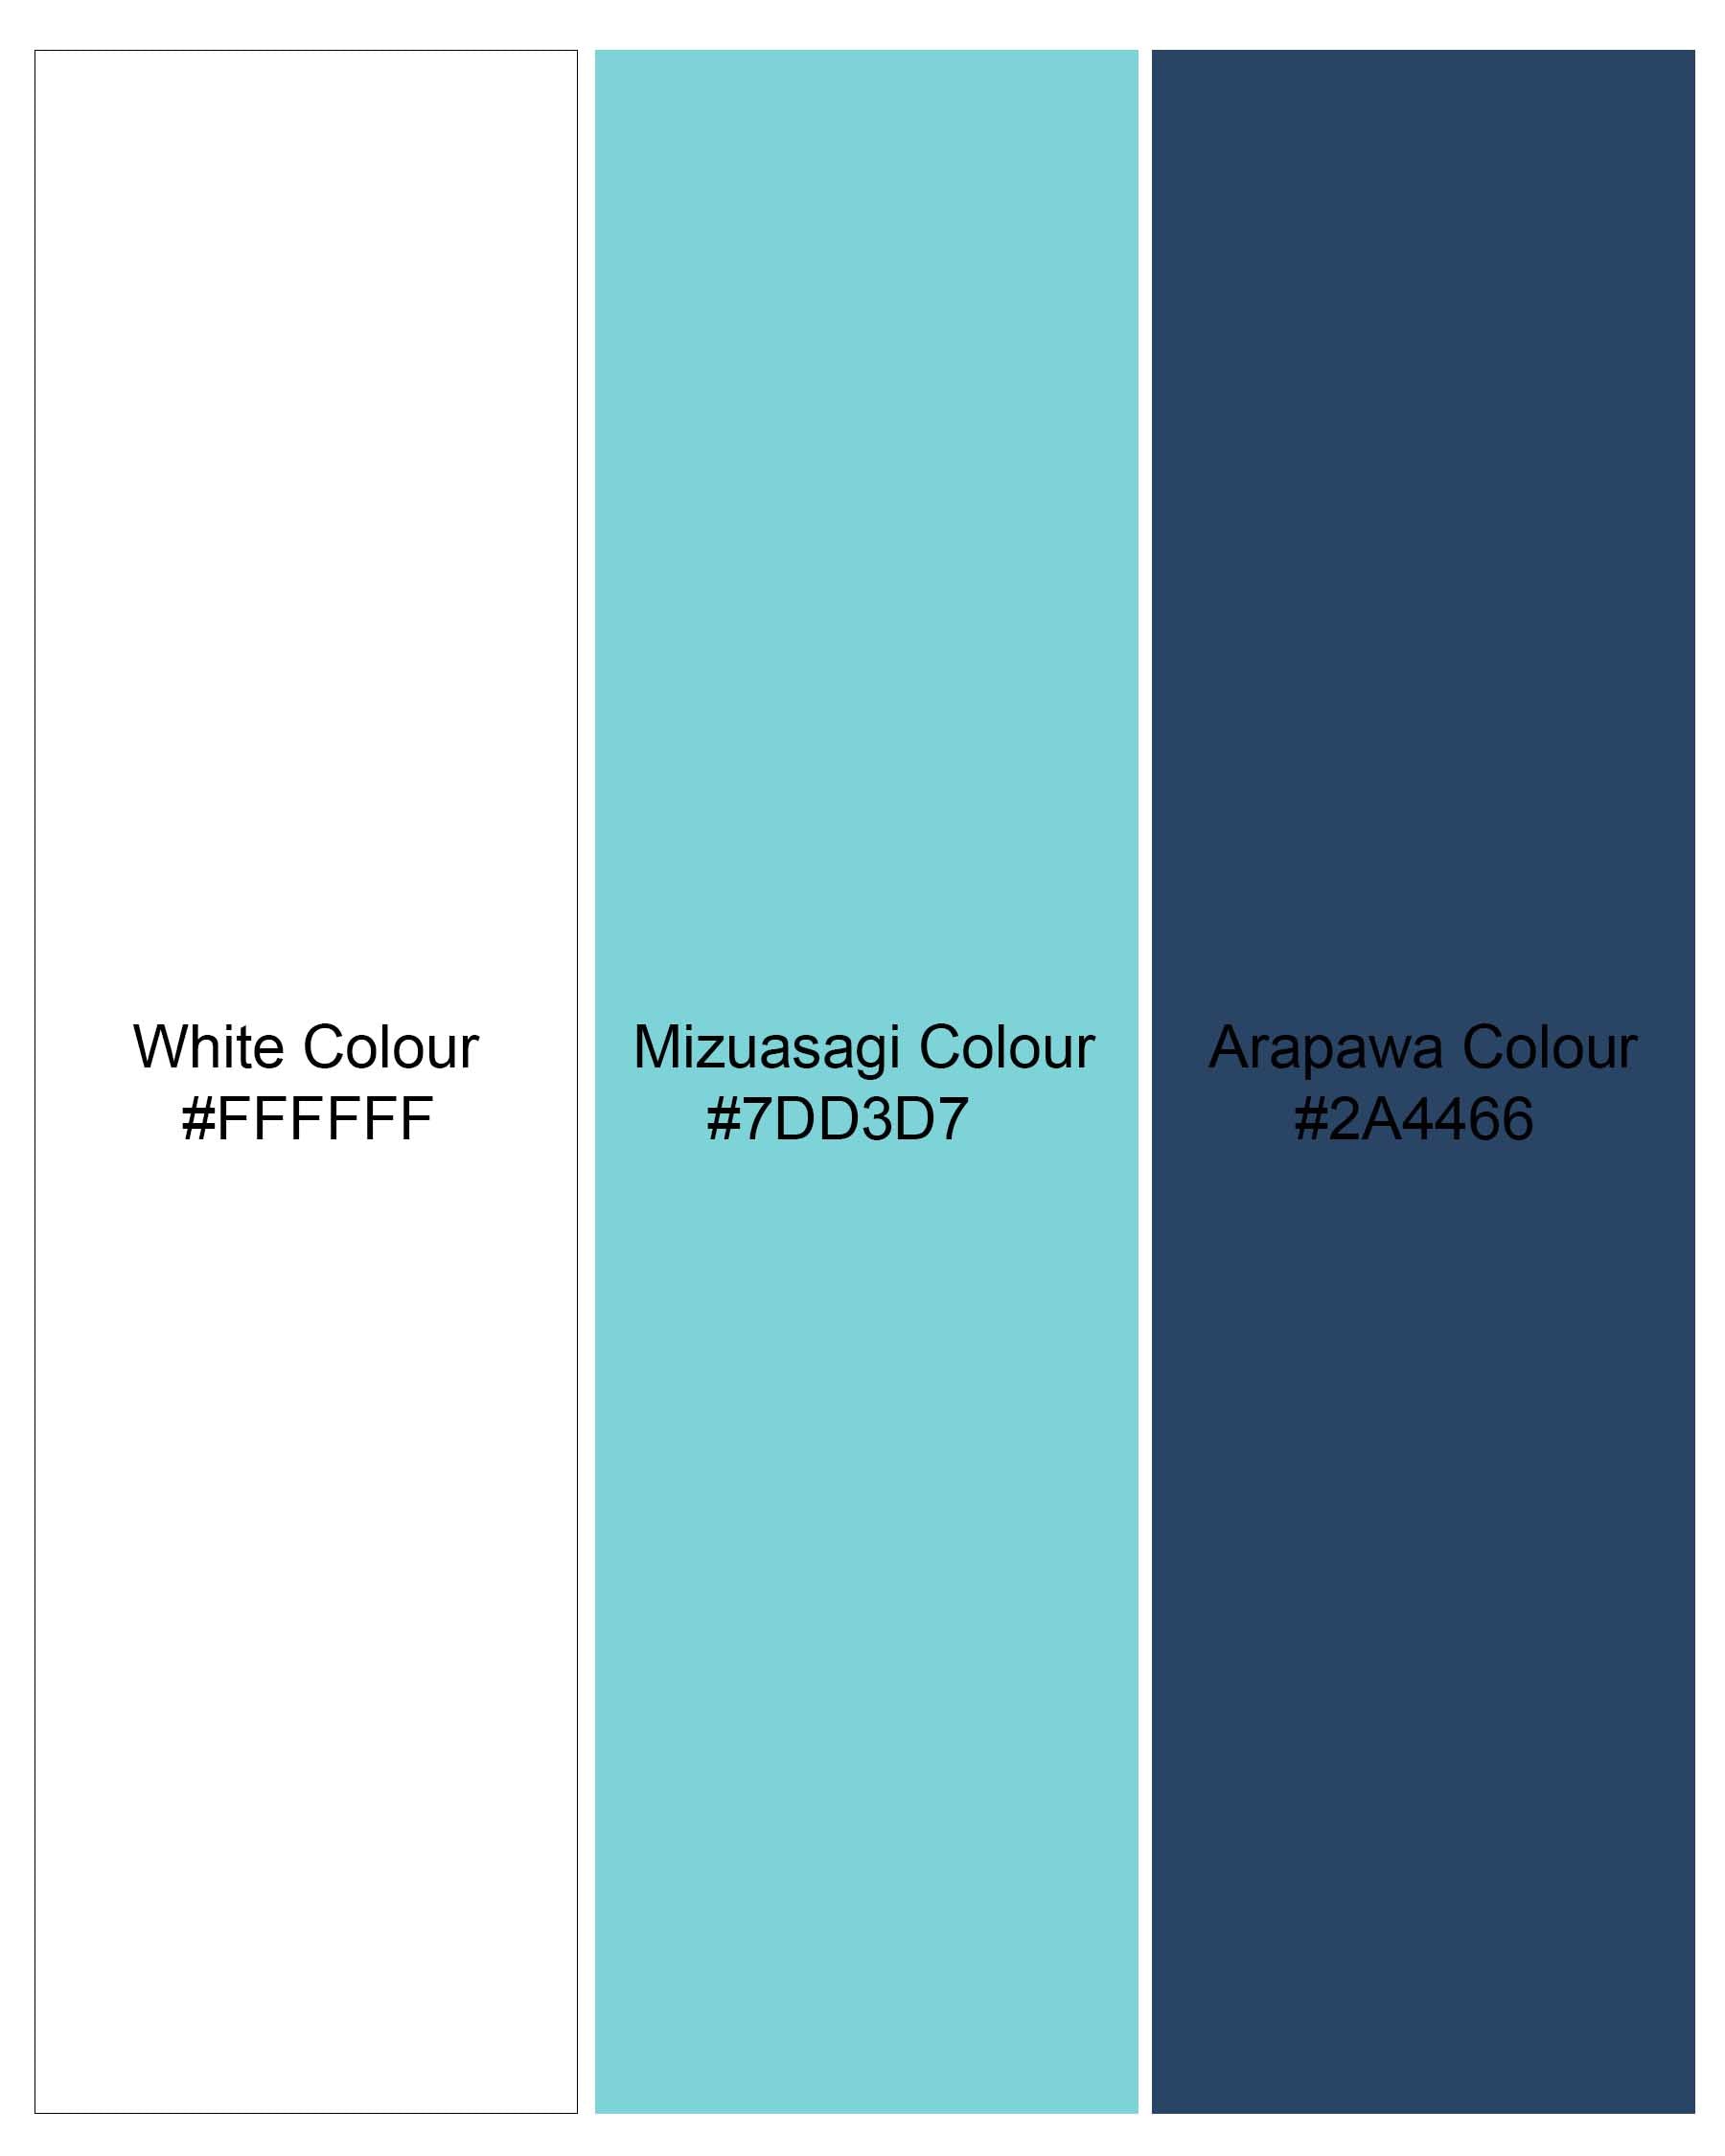 Bright White With Blue Striped Dobby Textured Premium Giza Cotton Shirt 7811-CA-38, 7811-CA-H-38, 7811-CA-39,7811-CA-H-39, 7811-CA-40, 7811-CA-H-40, 7811-CA-42, 7811-CA-H-42, 7811-CA-44, 7811-CA-H-44, 7811-CA-46, 7811-CA-H-46, 7811-CA-48, 7811-CA-H-48, 7811-CA-50, 7811-CA-H-50, 7811-CA-52, 7811-CA-H-52